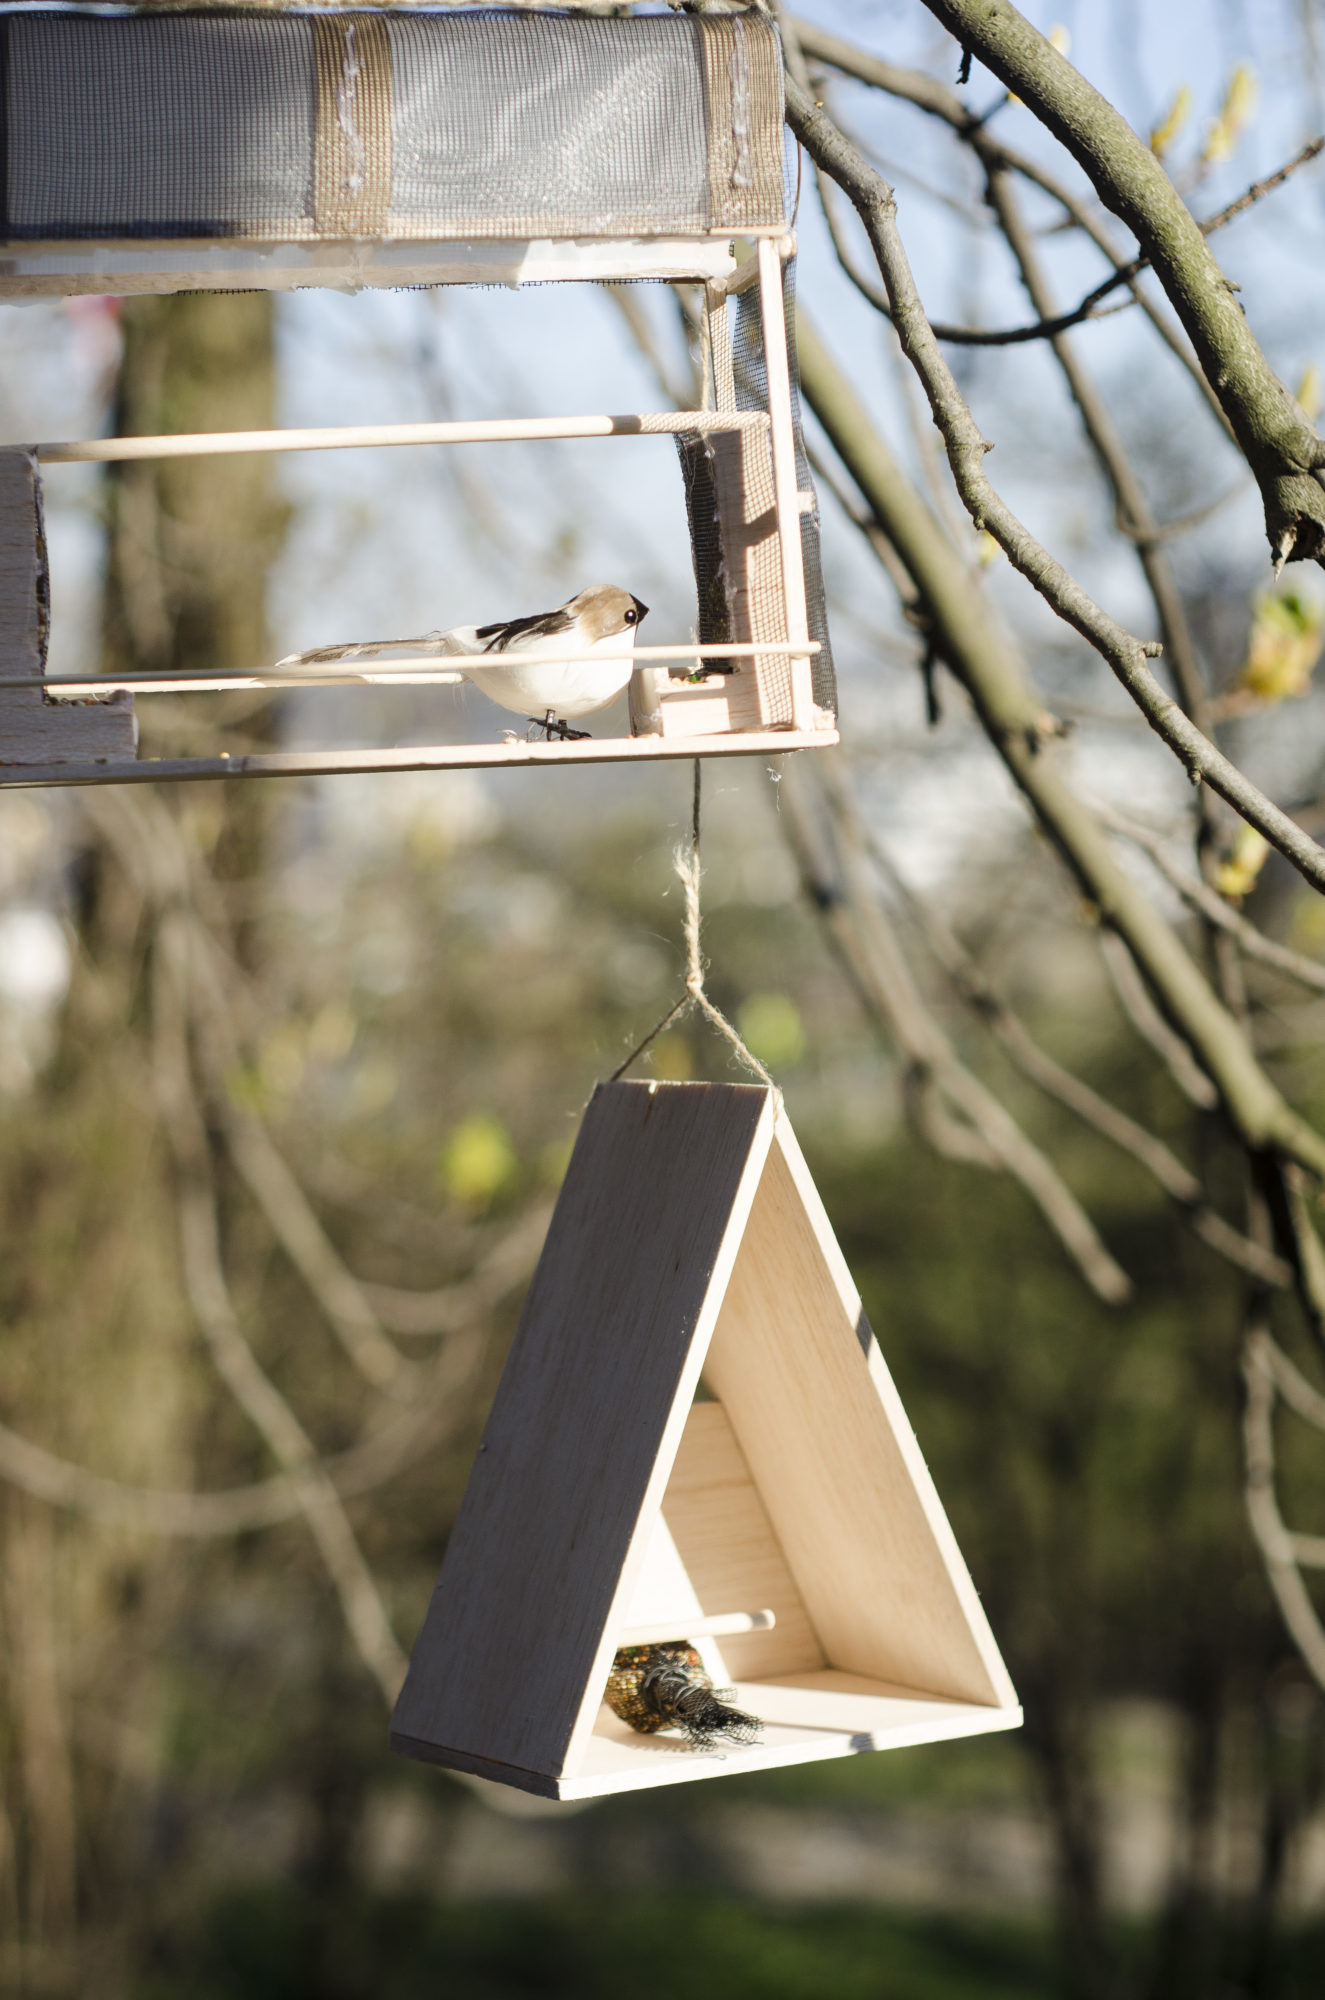 Designing bird houses